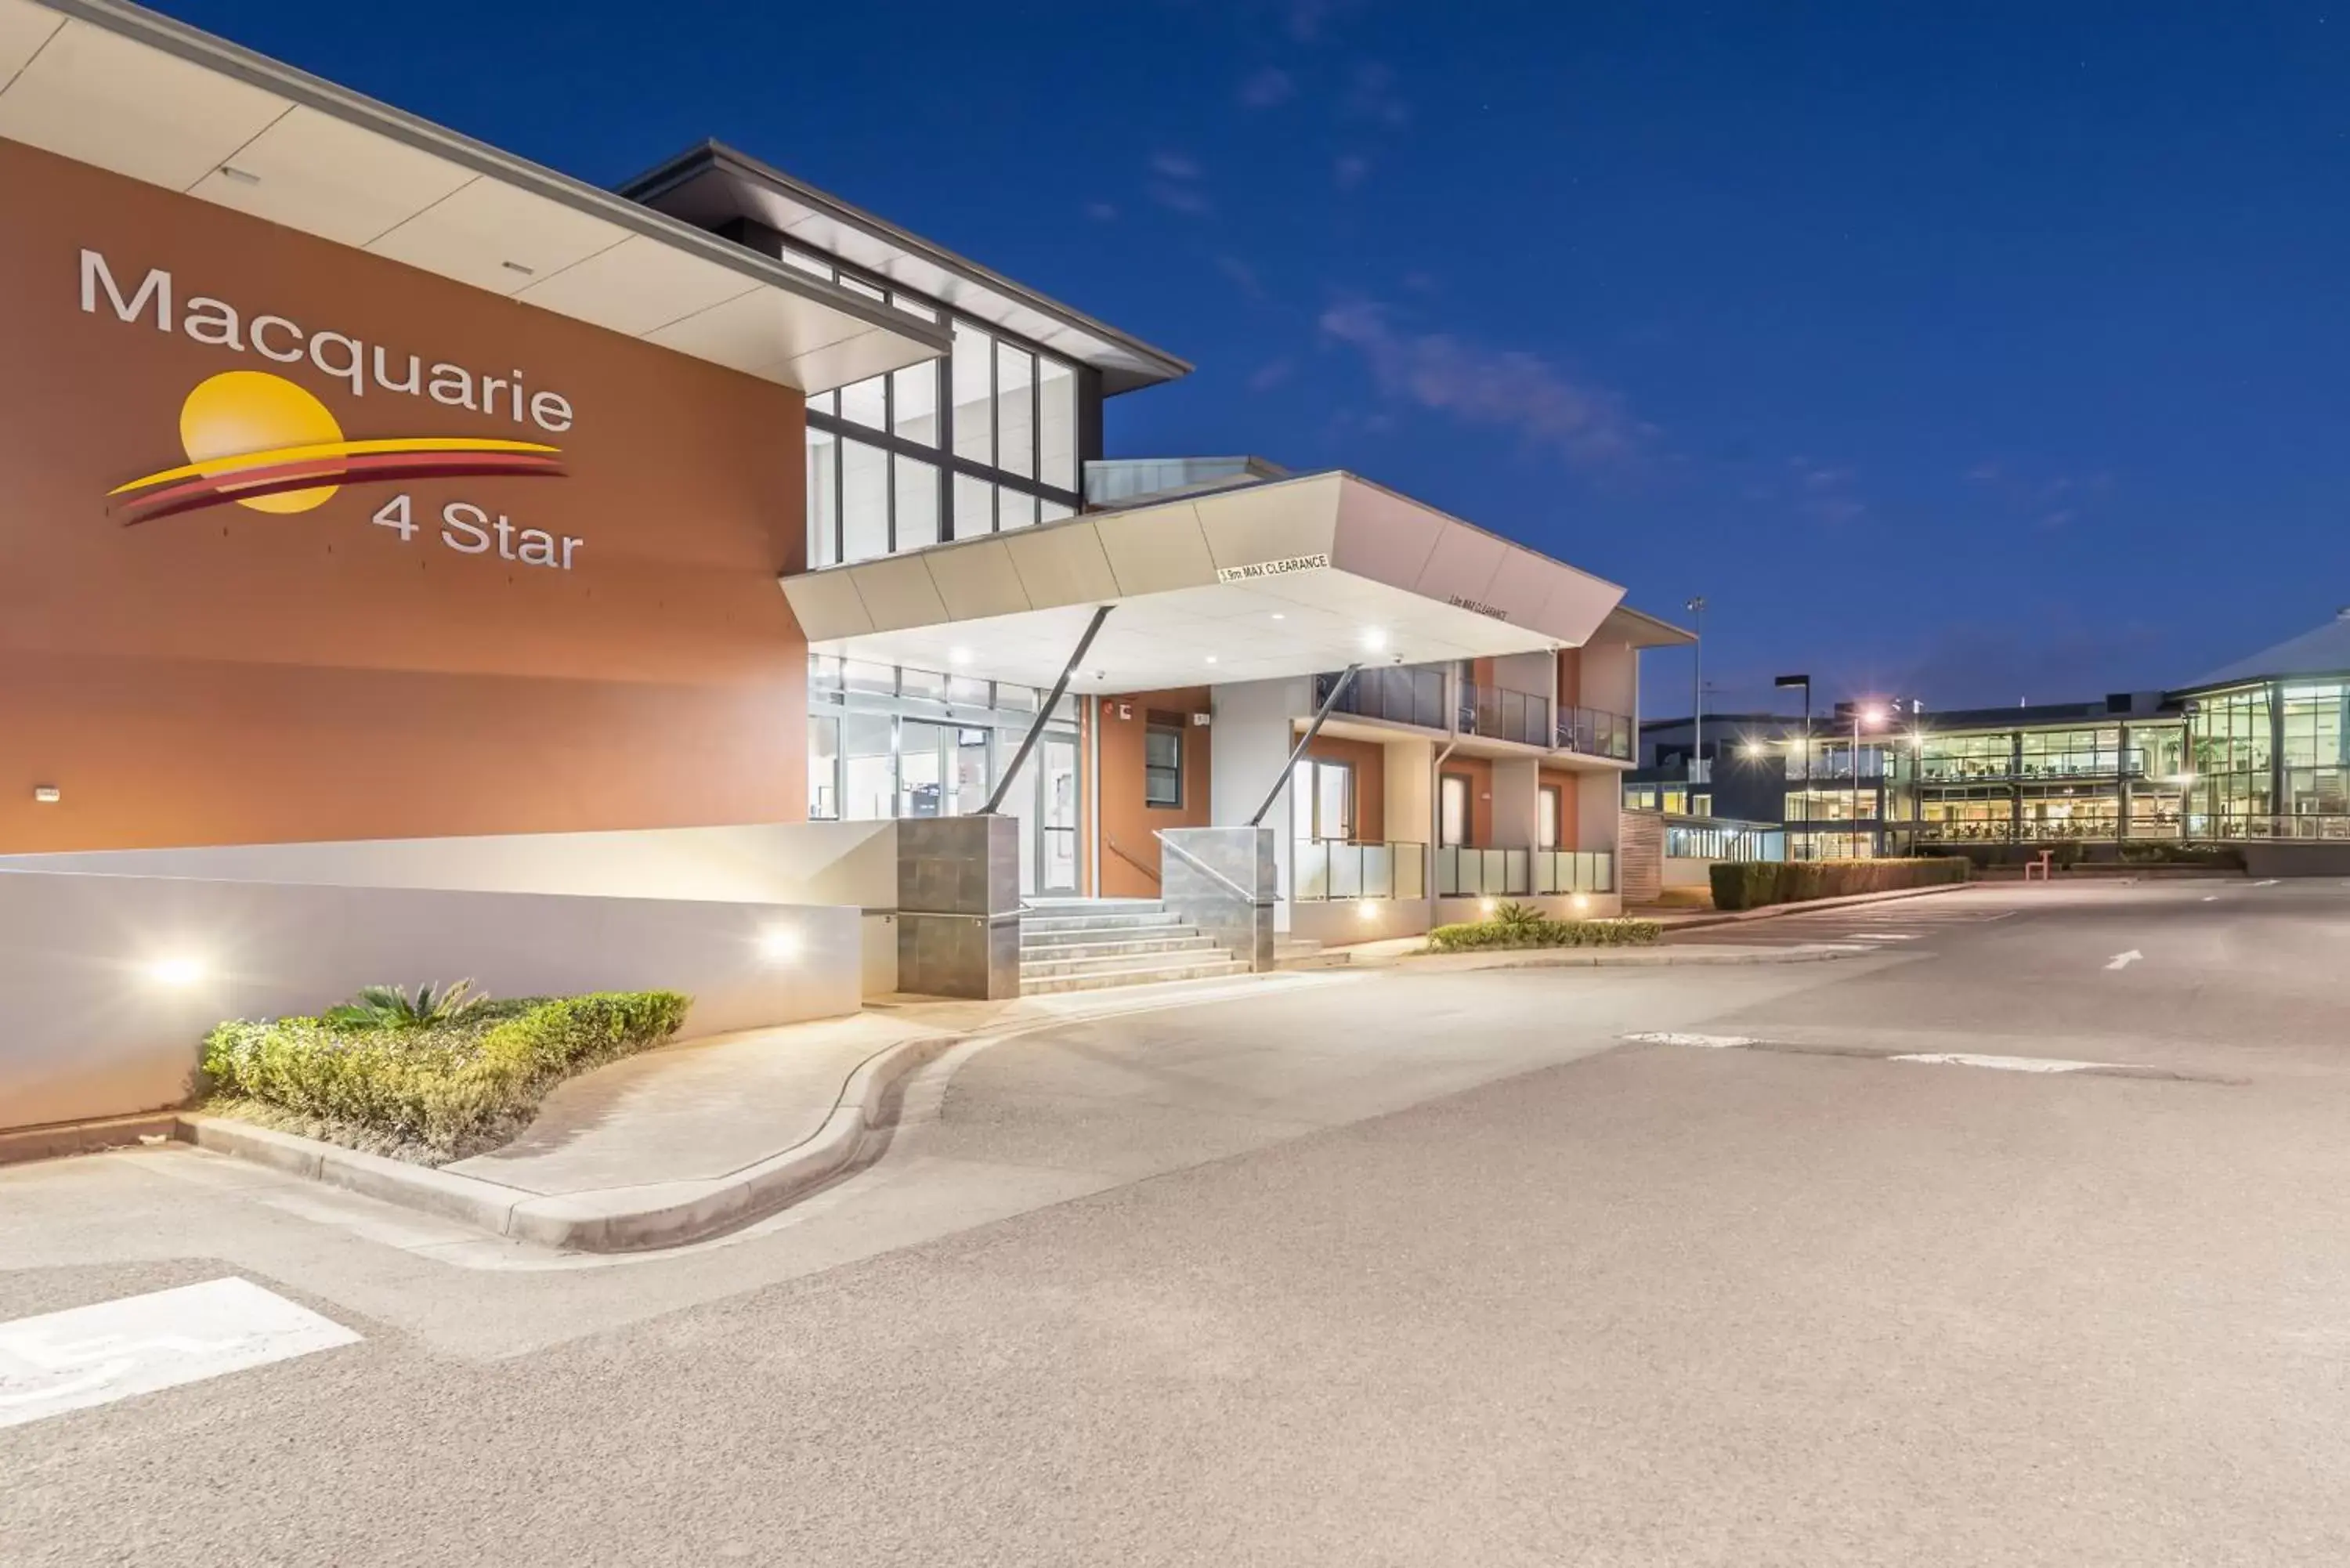 Property Building in Macquarie 4 Star